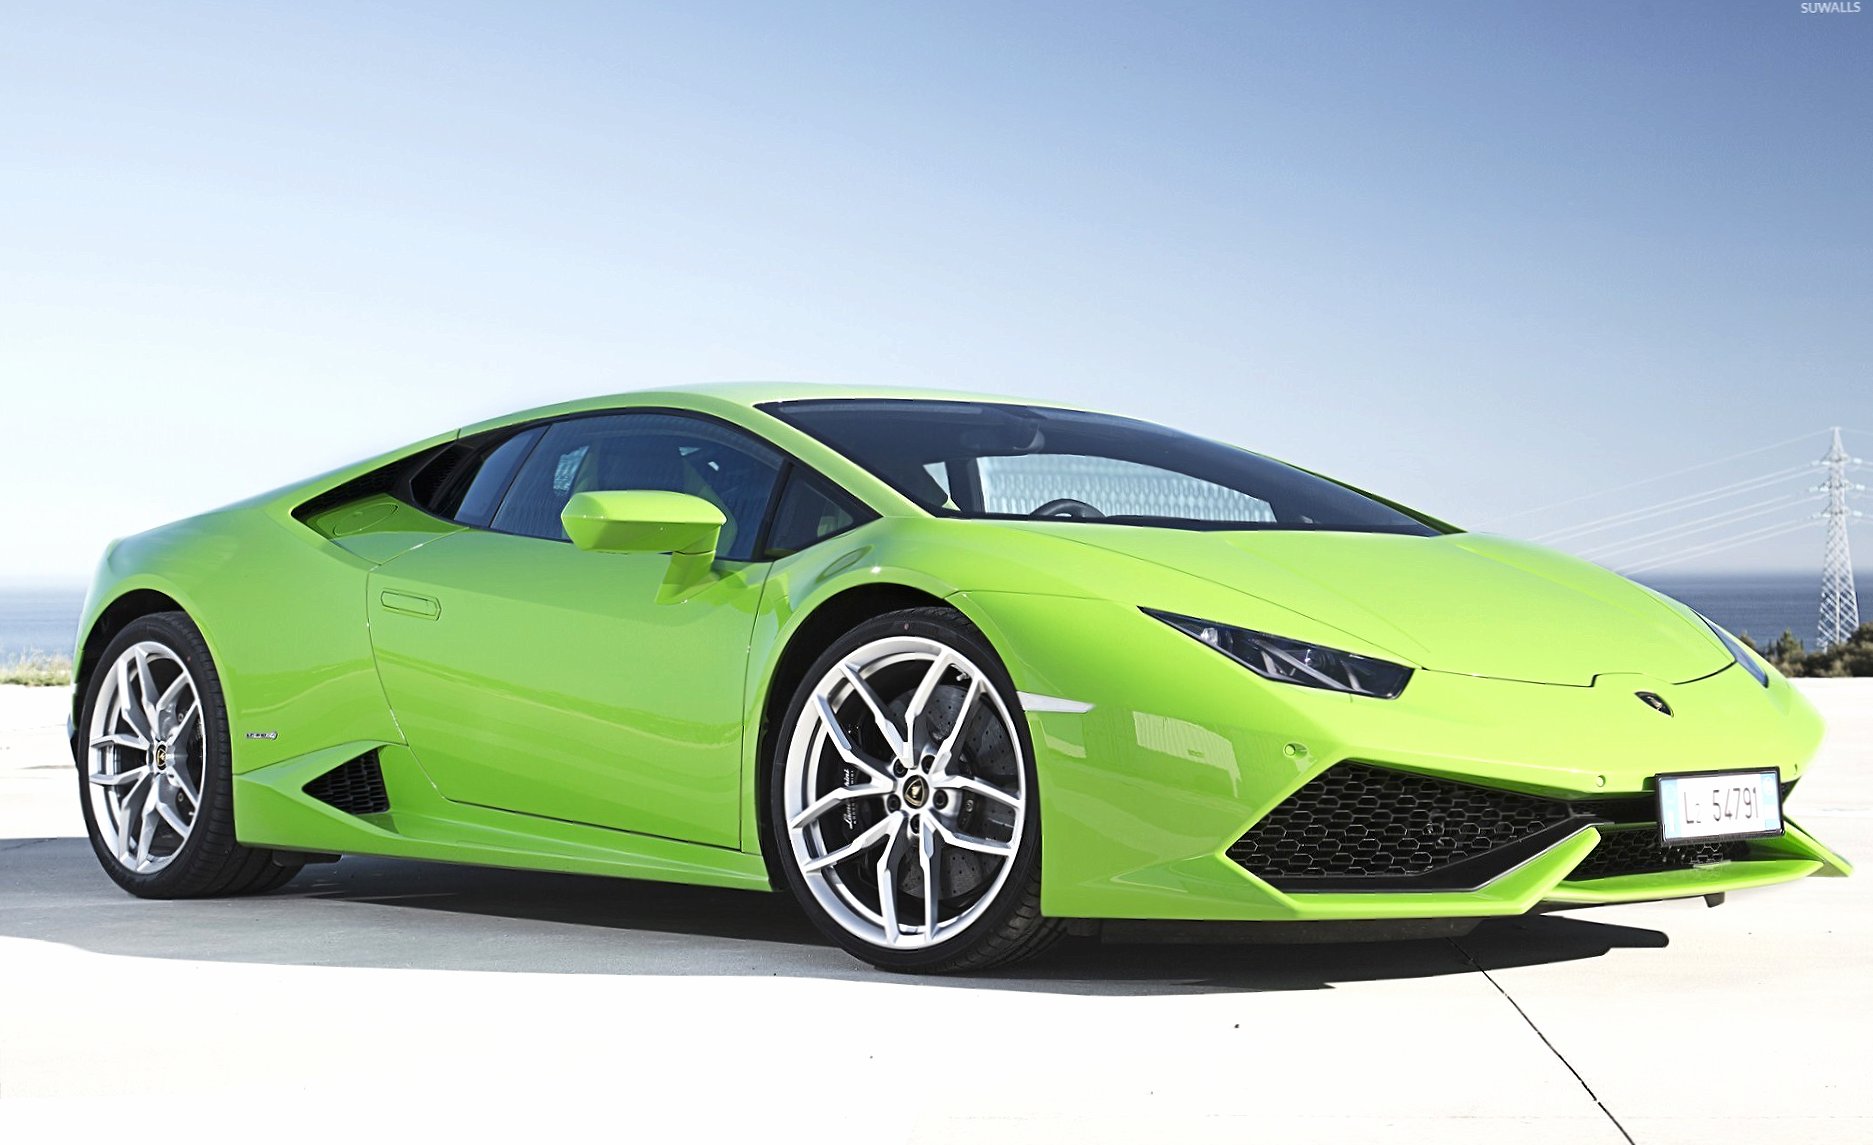 2014 Green Lamborghini Huracan at 1600 x 1200 size wallpapers HD quality